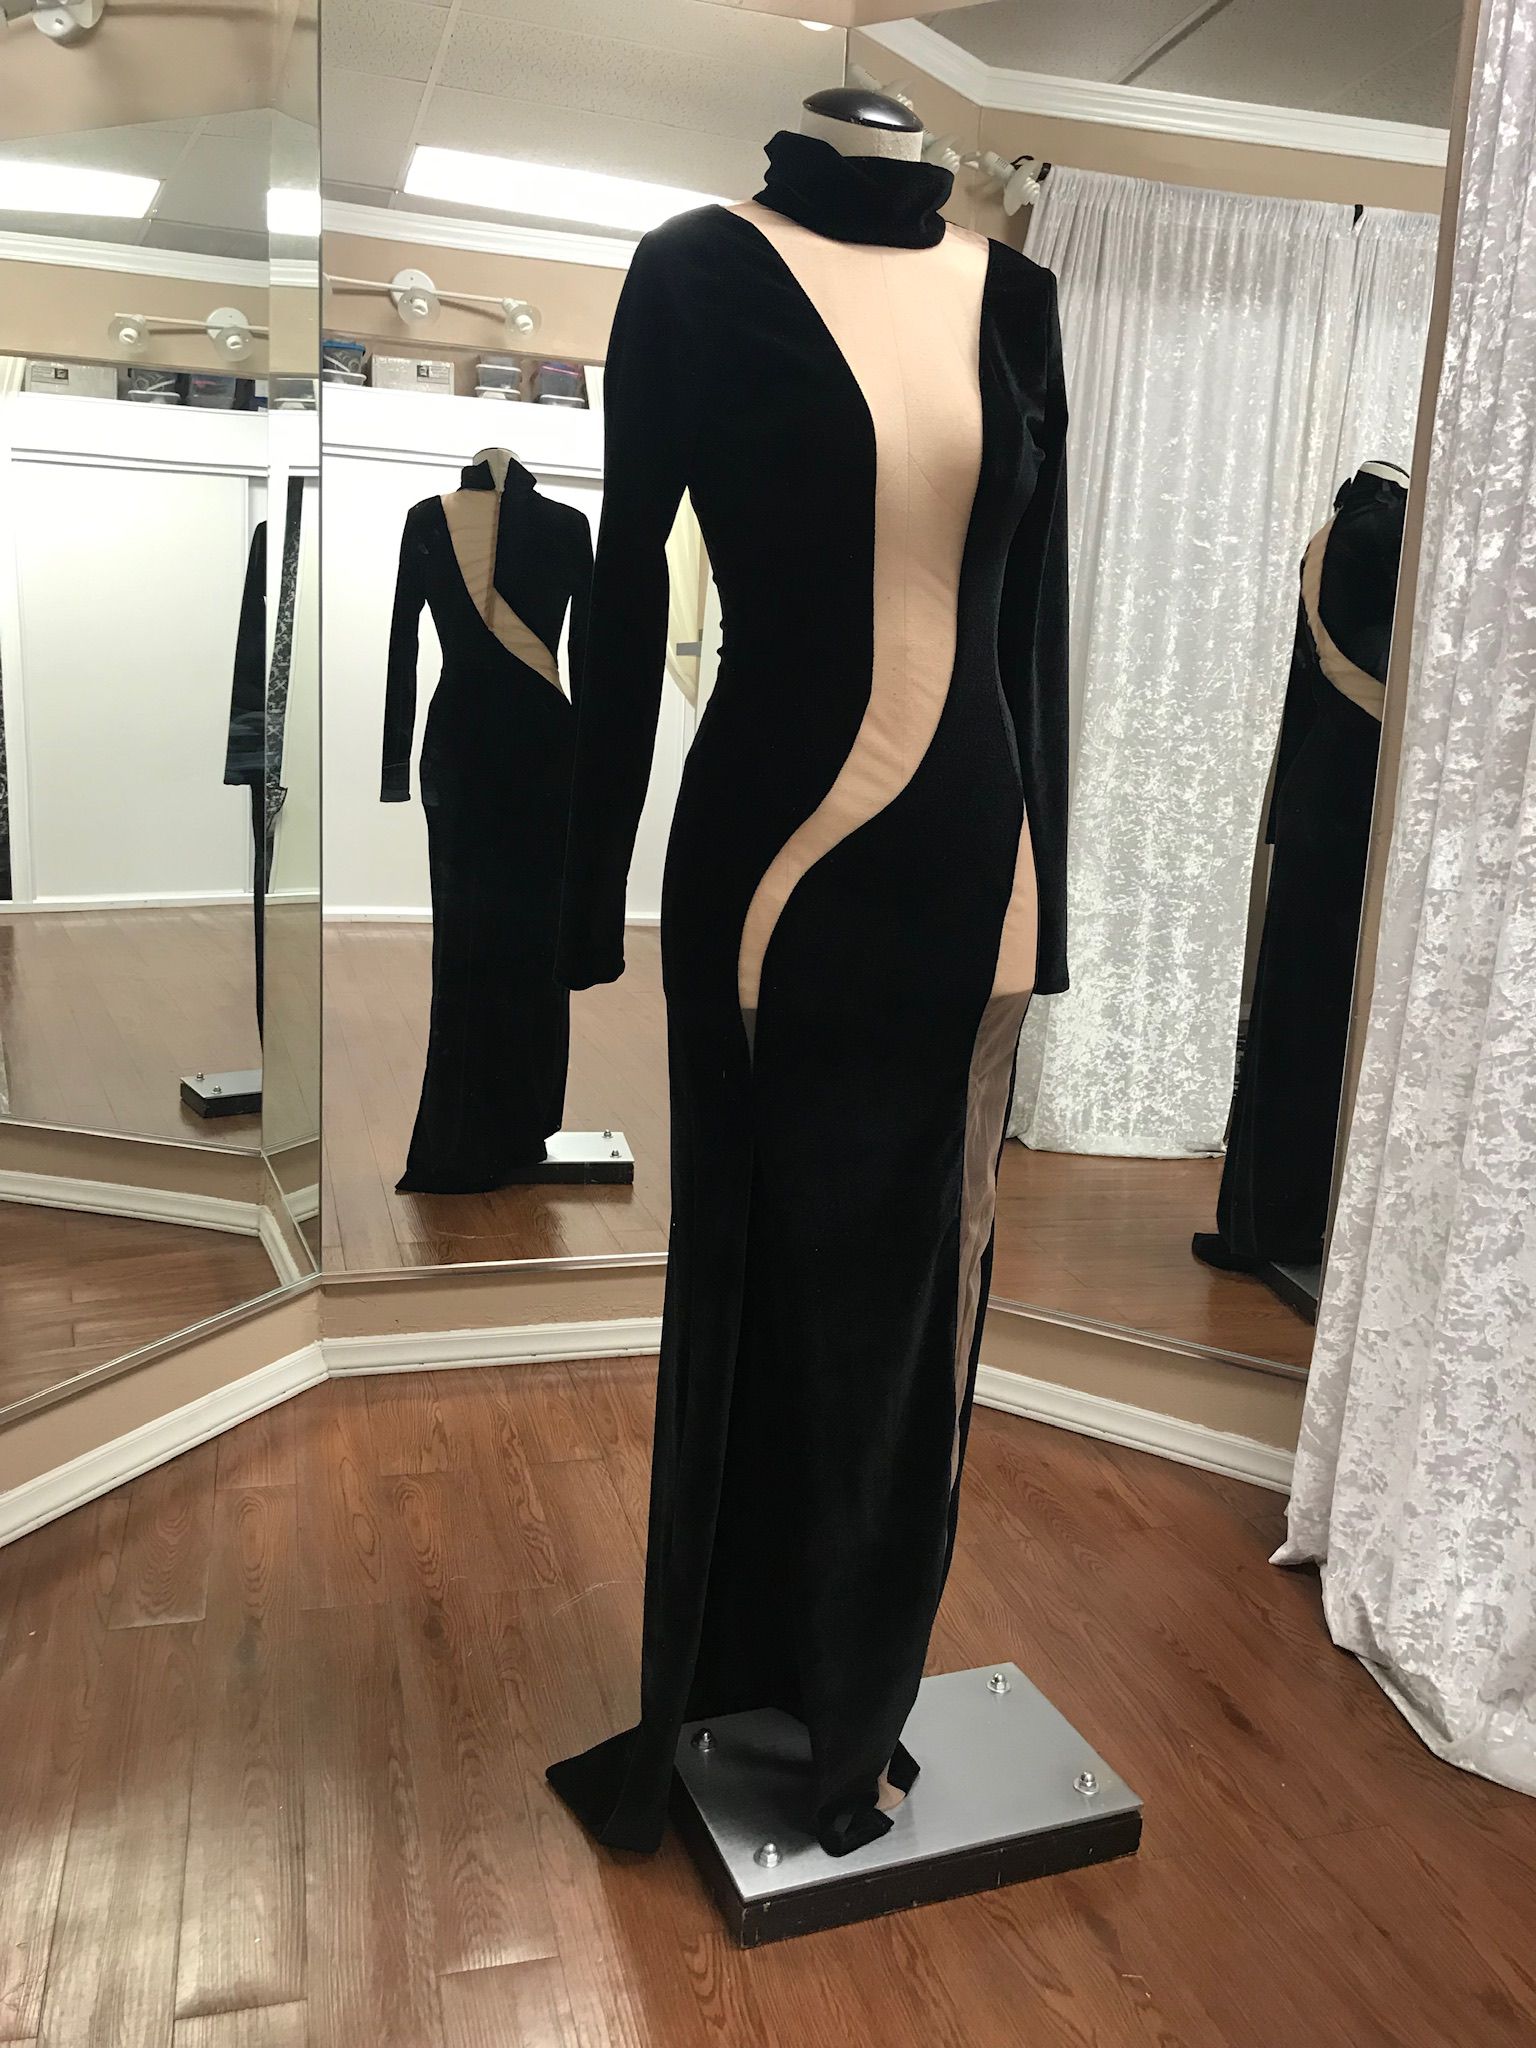 Larissa Couture LV Side Slit Prom Dress